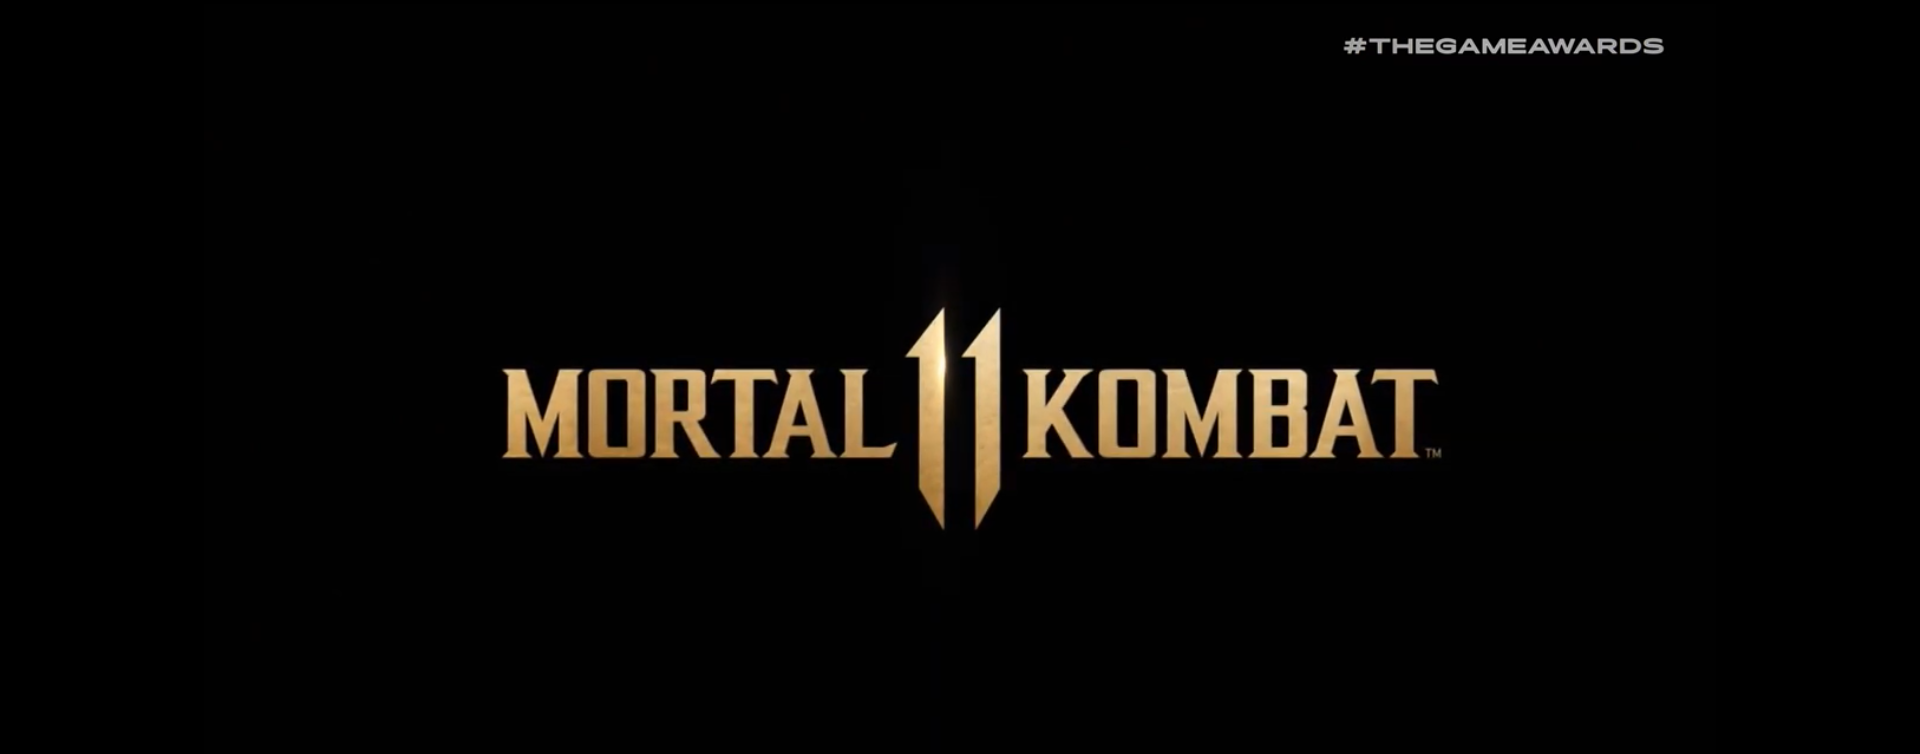 Mortal Kombat 11 Confirmed for Nintendo Switch